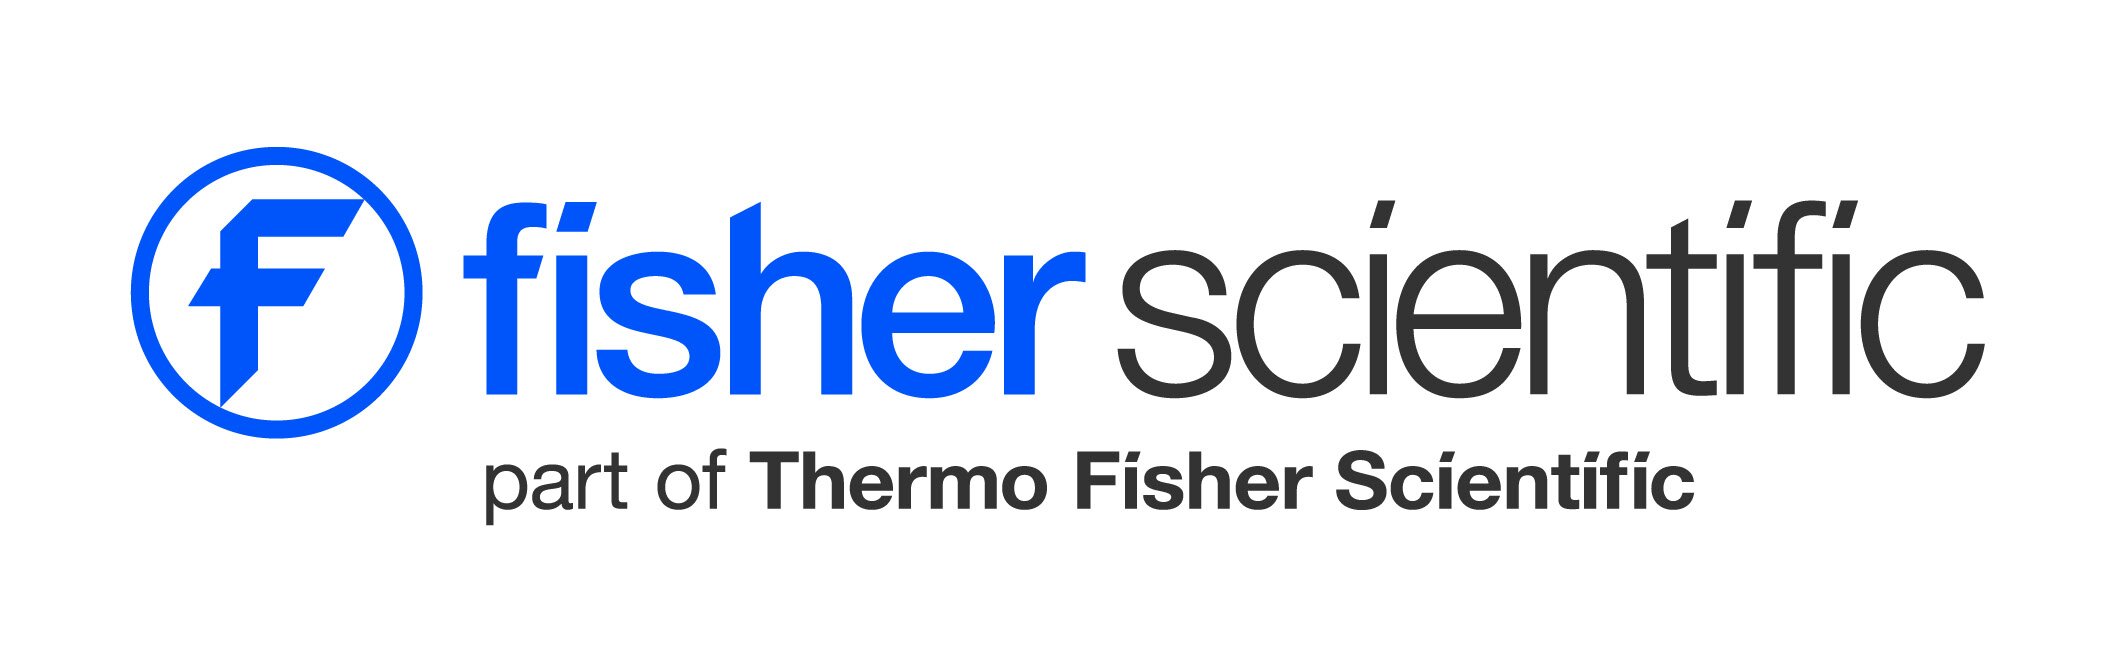 Fisher-Scientific-Single-Line-Endorsed 7.18.19.jpg